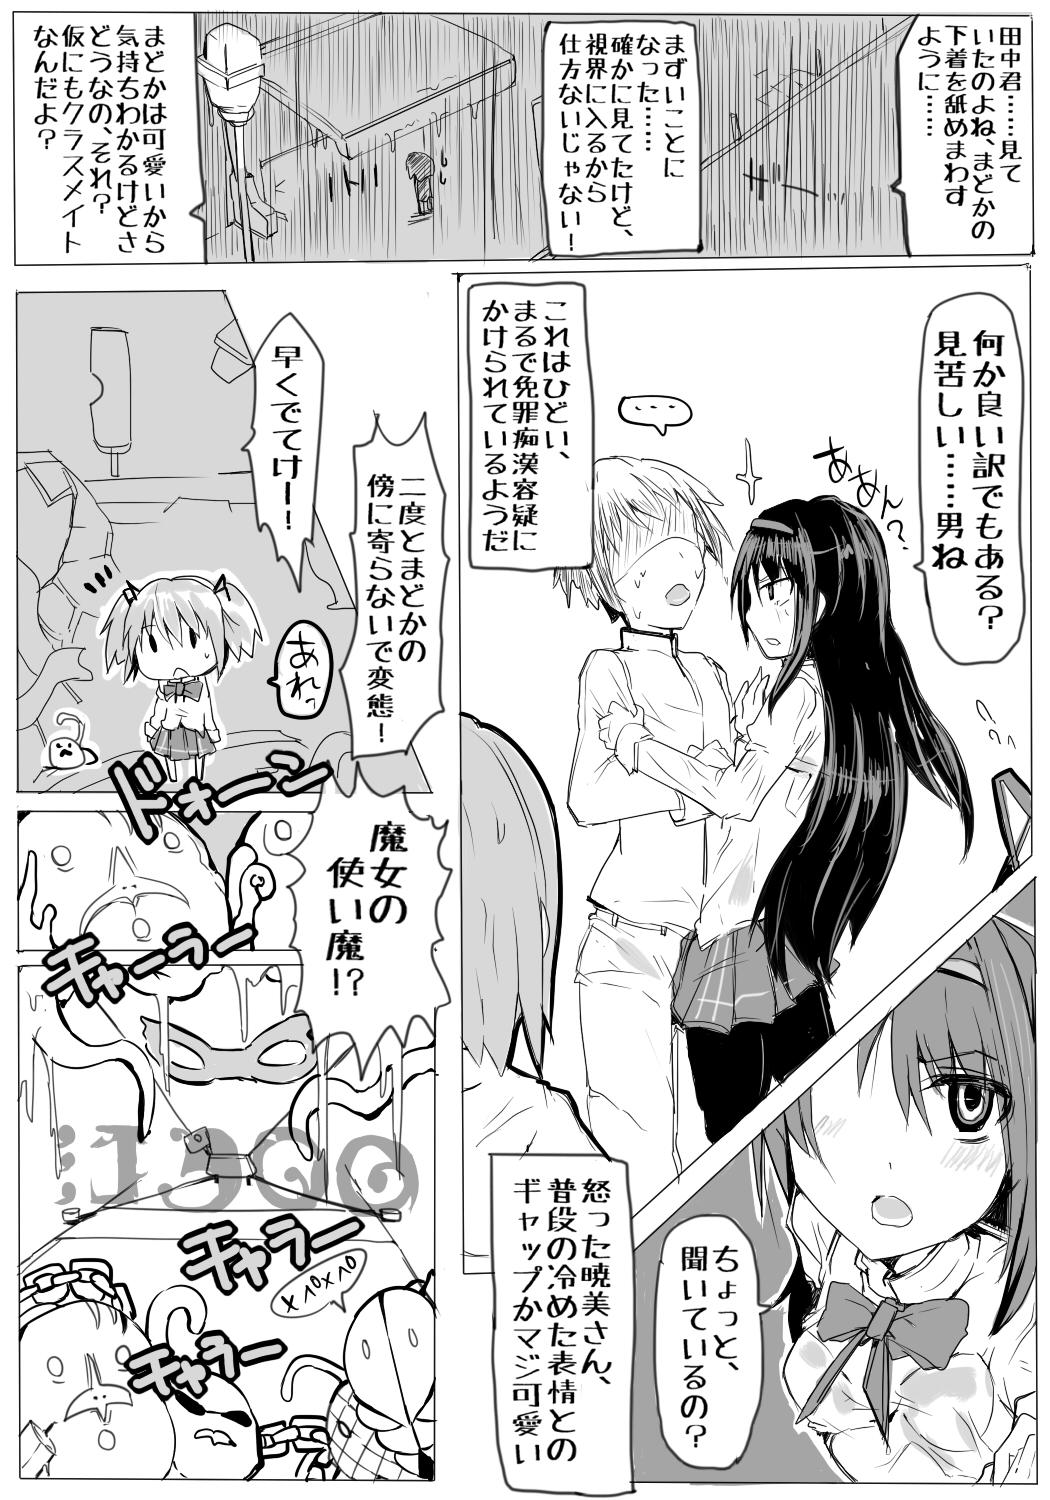 Slapping 魔法少女まどか☆マギカと田中 - Puella magi madoka magica Teenager - Page 3